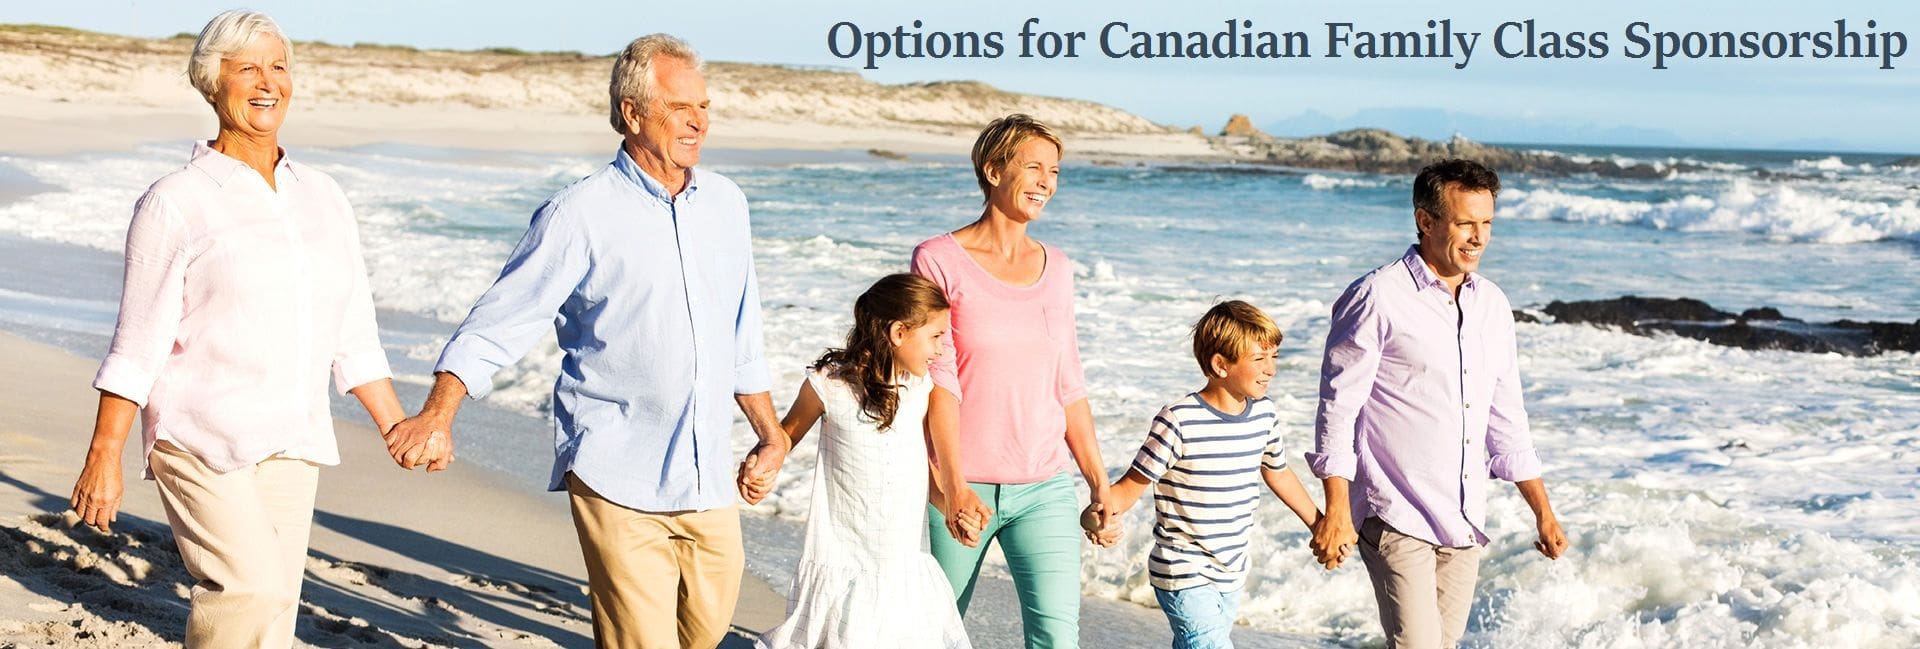 Options-for-Canadian-Family-Class-Sponsorship.jpg